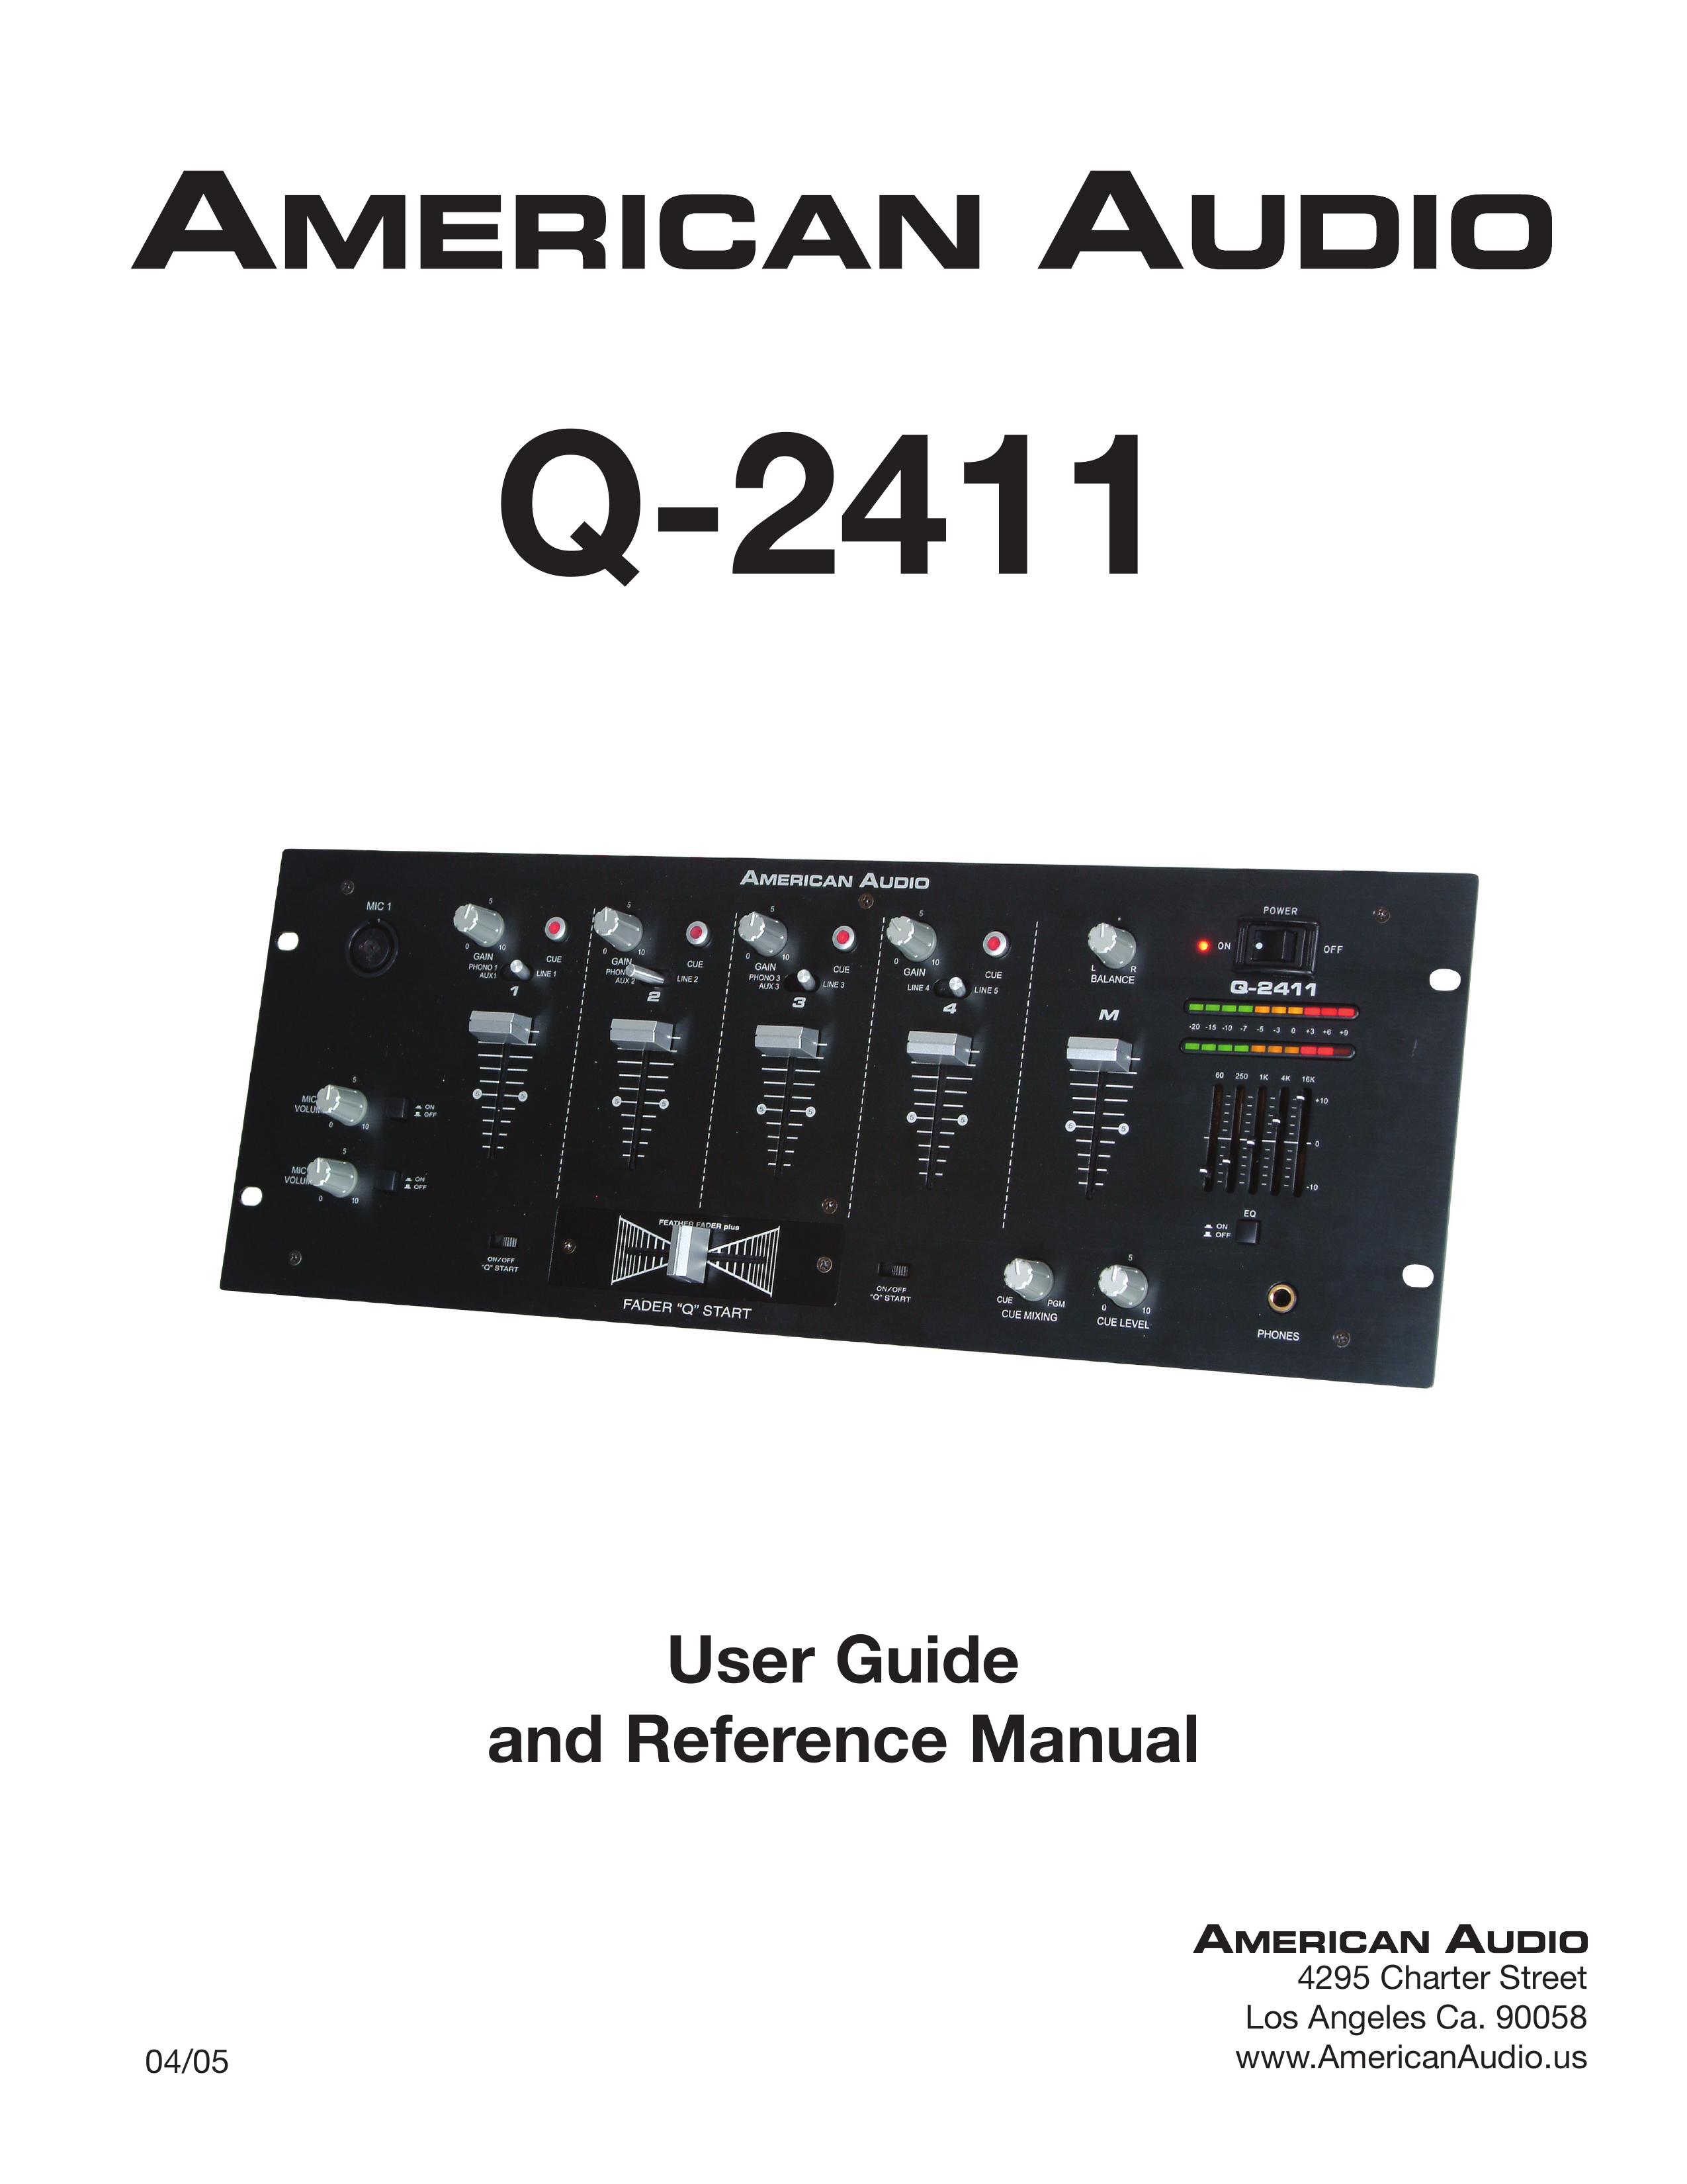 American Audio Q-2411 Musical Instrument User Manual